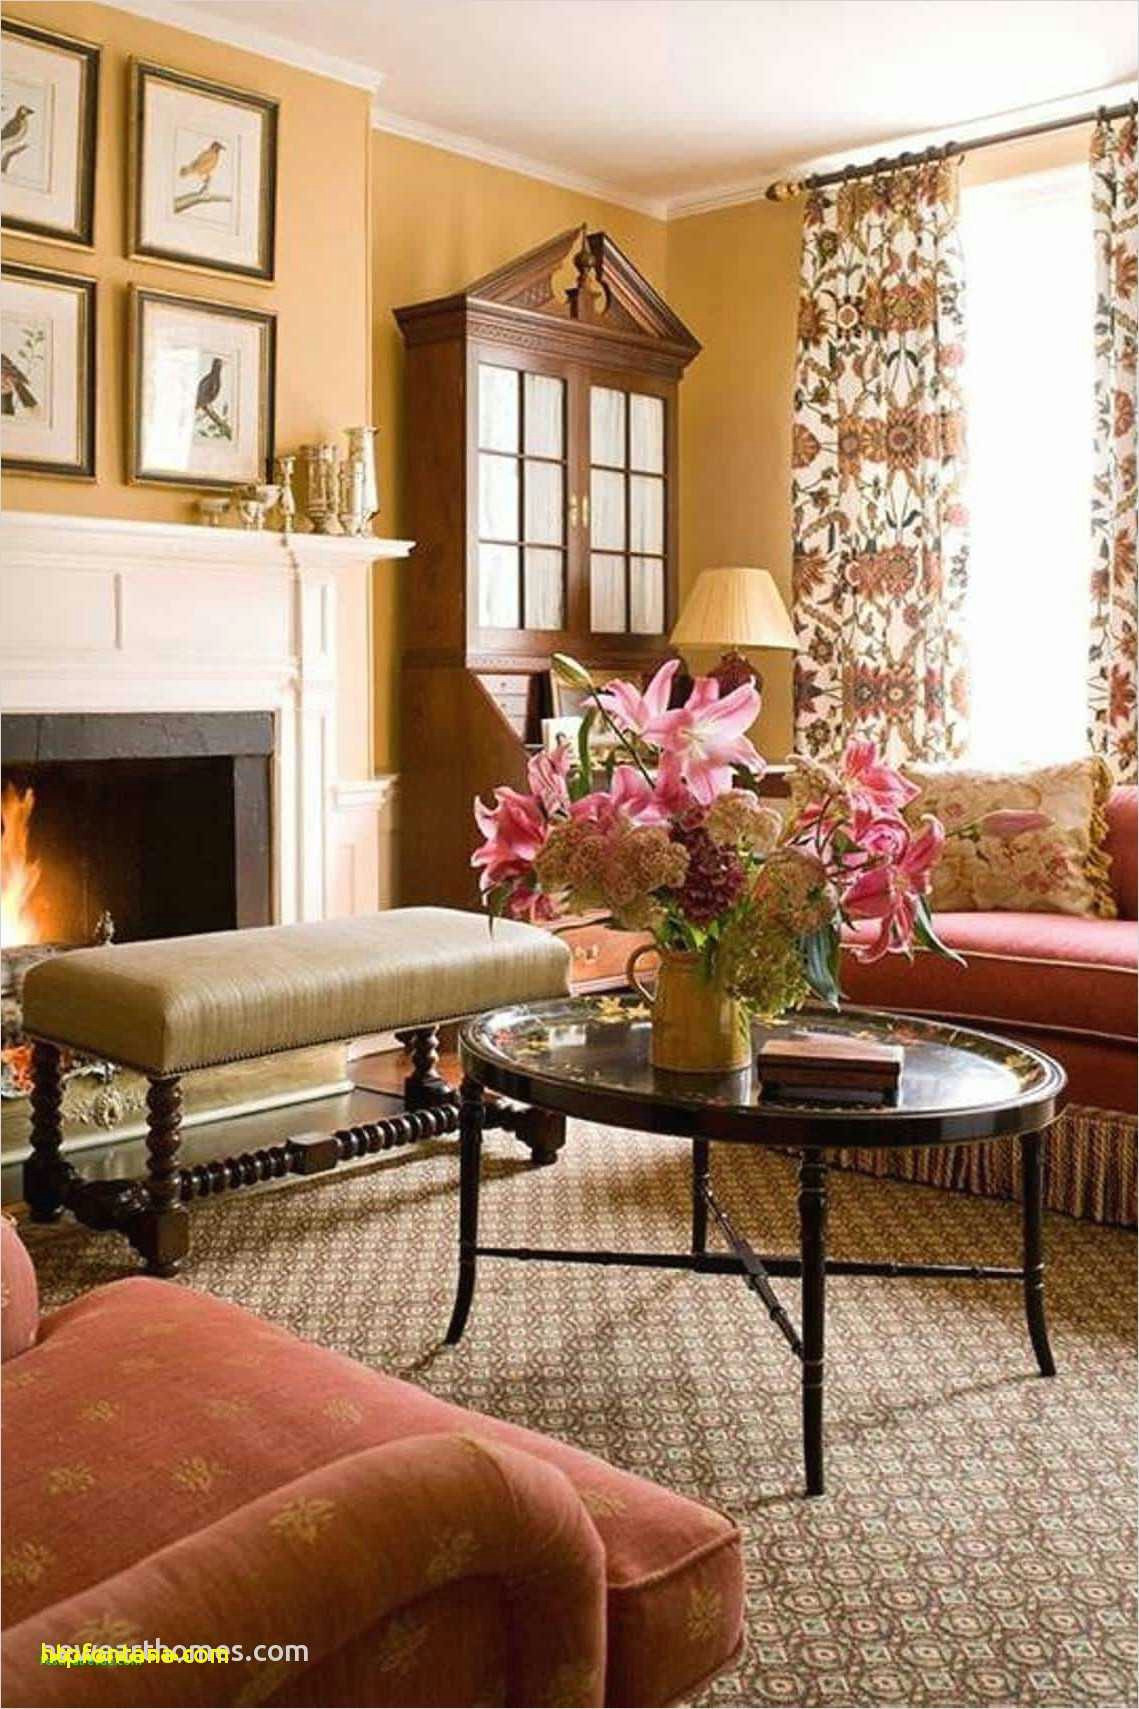 living room flower vaseh vases vase like architecture interior design follow us i 0d from wall